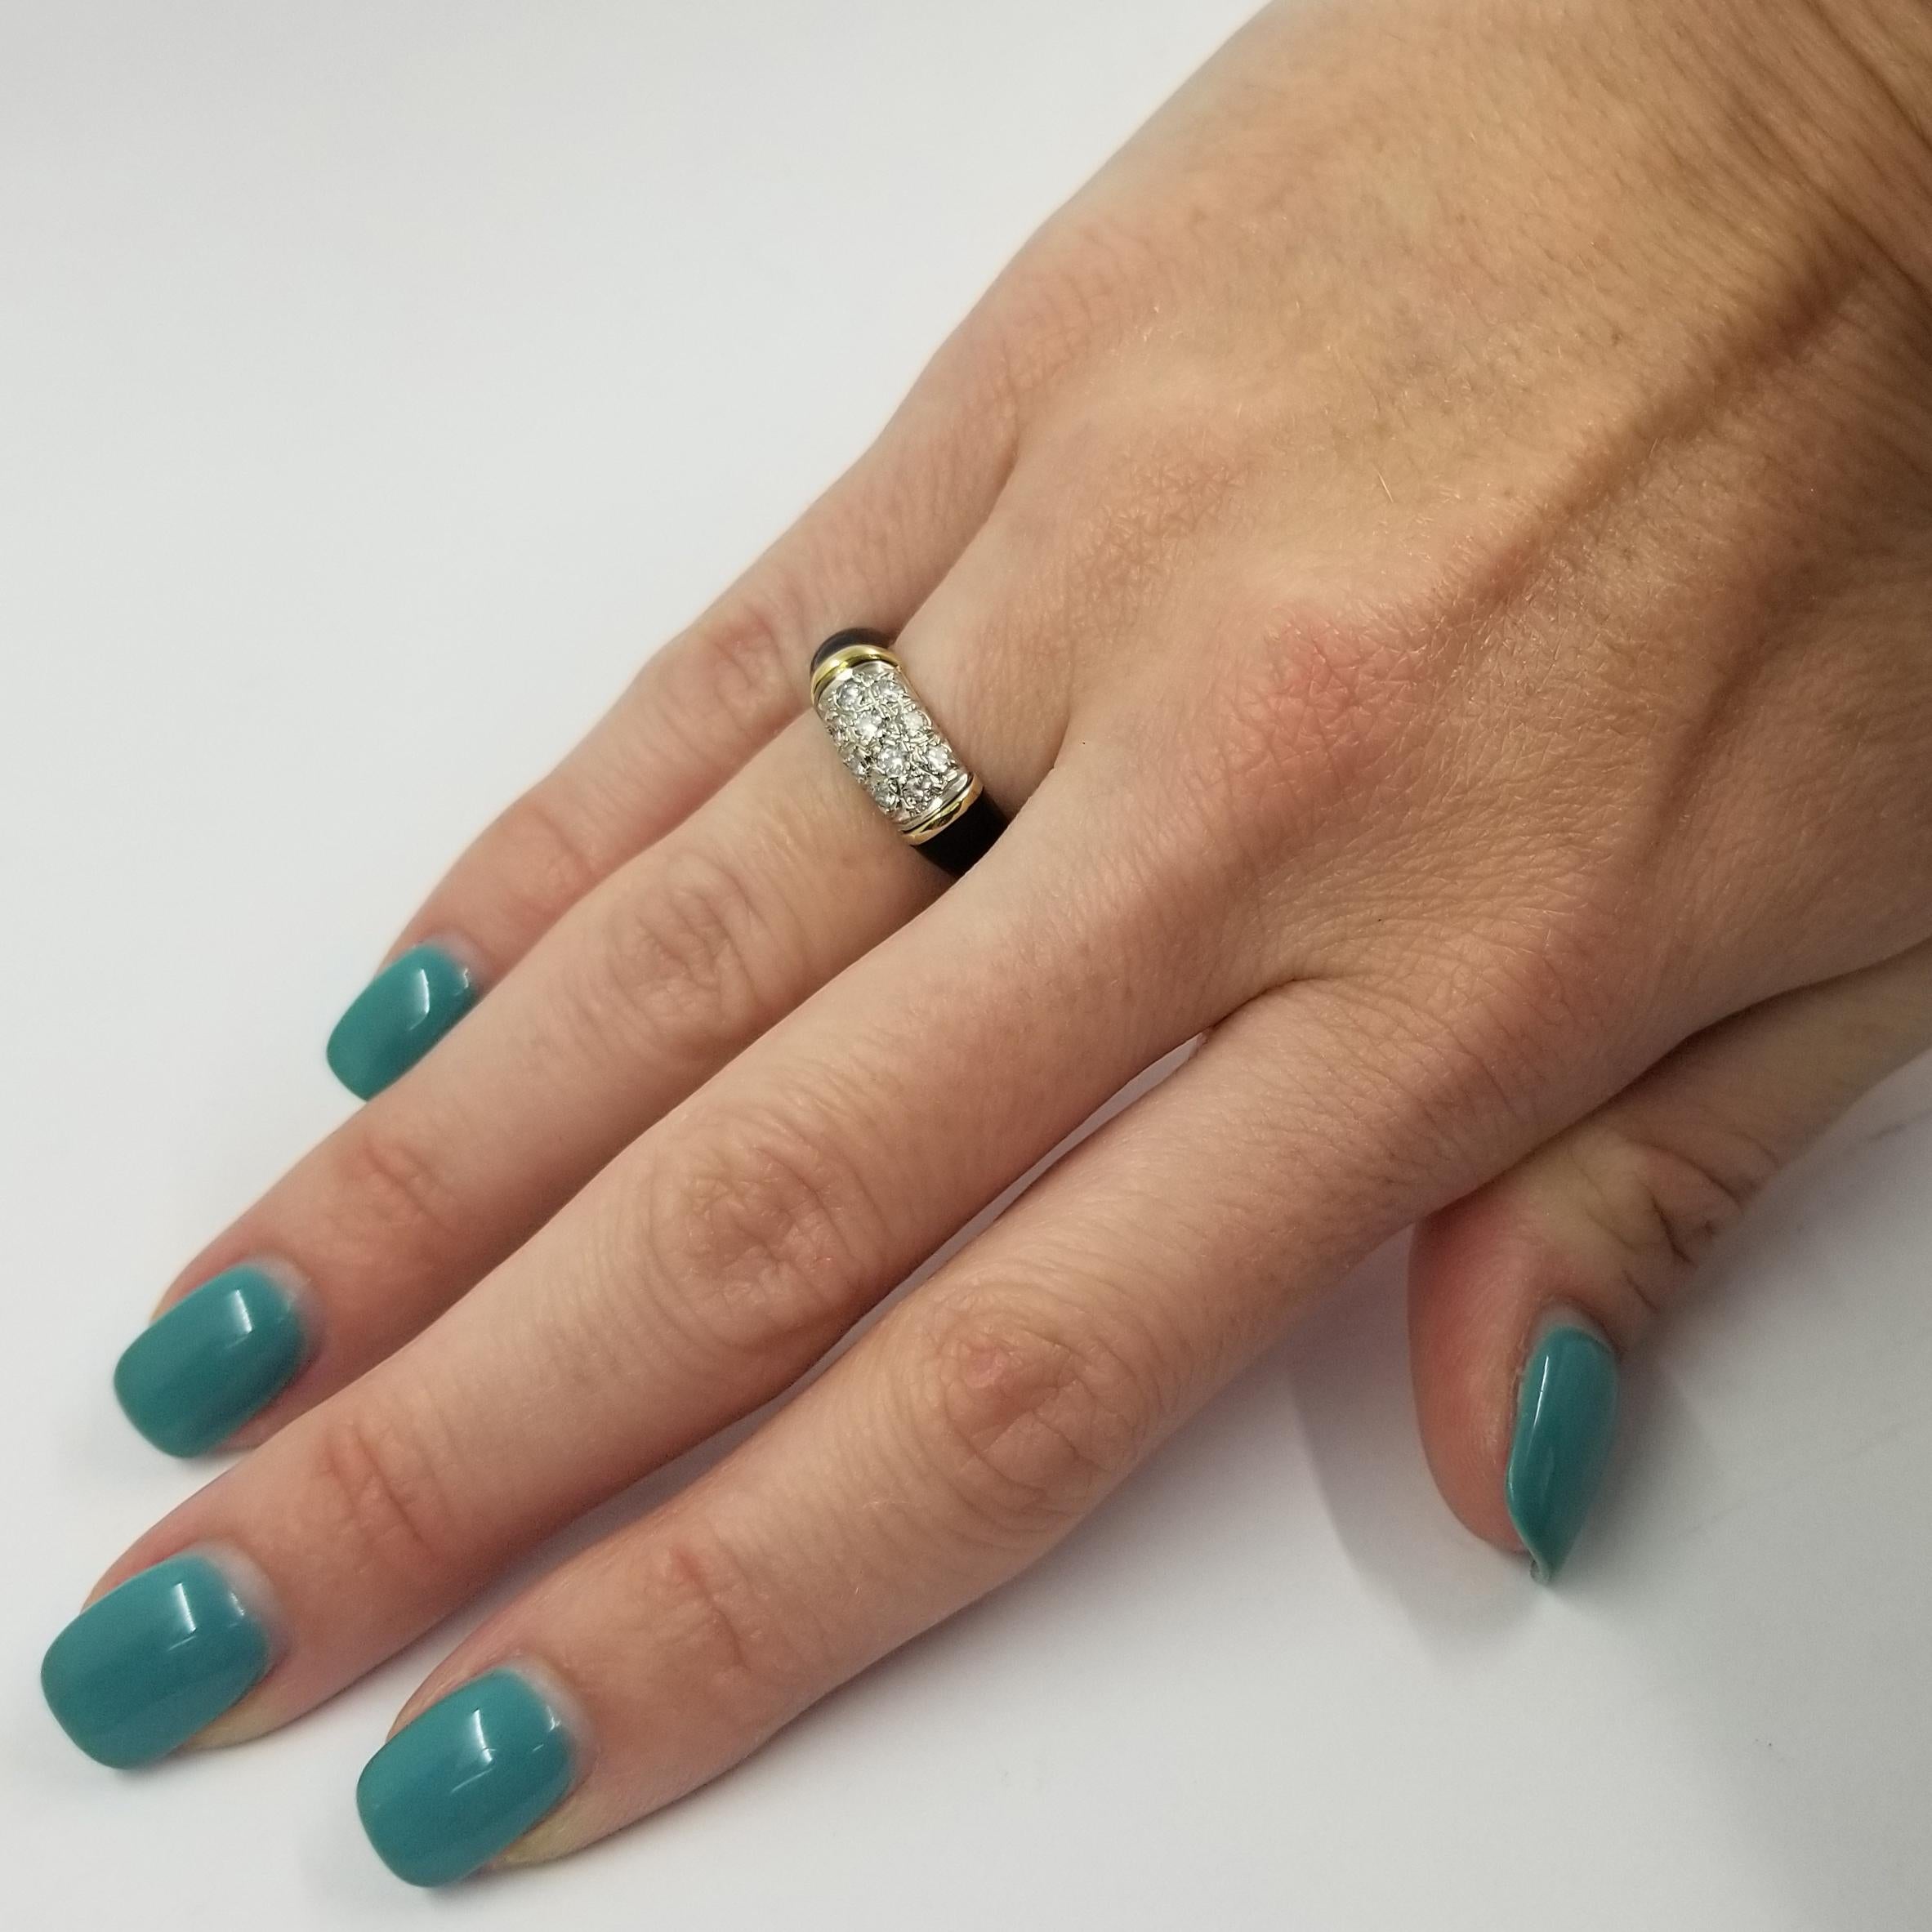 Women's Torrini Black Enamel Ring with Pave Diamond Center